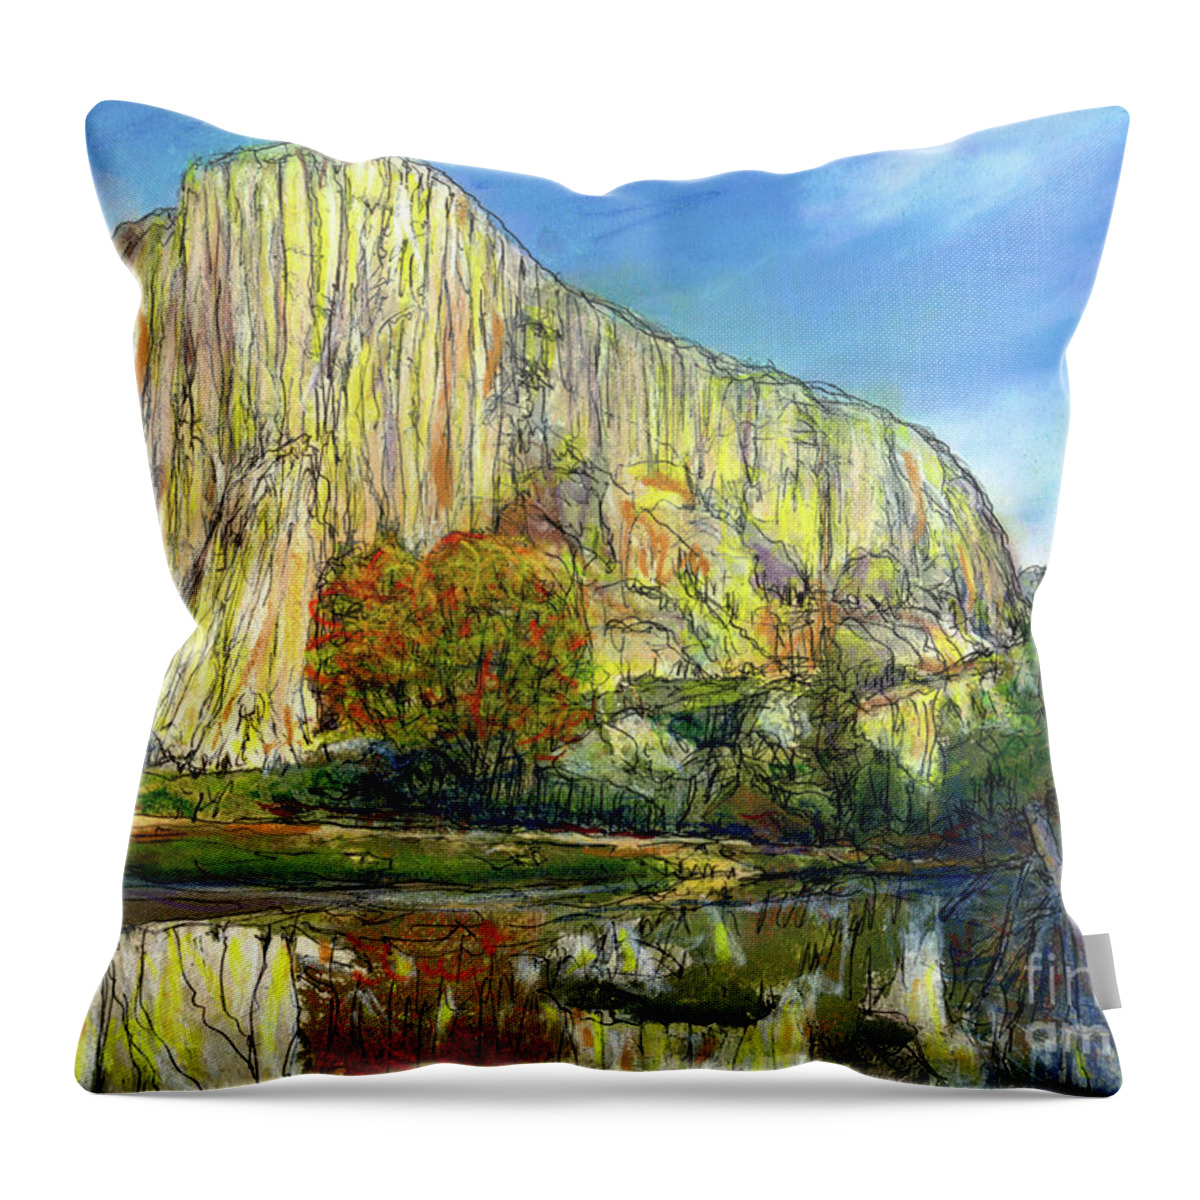  Yosemite National Park Throw Pillow featuring the painting Yosemite National Park. by Randy Sprout